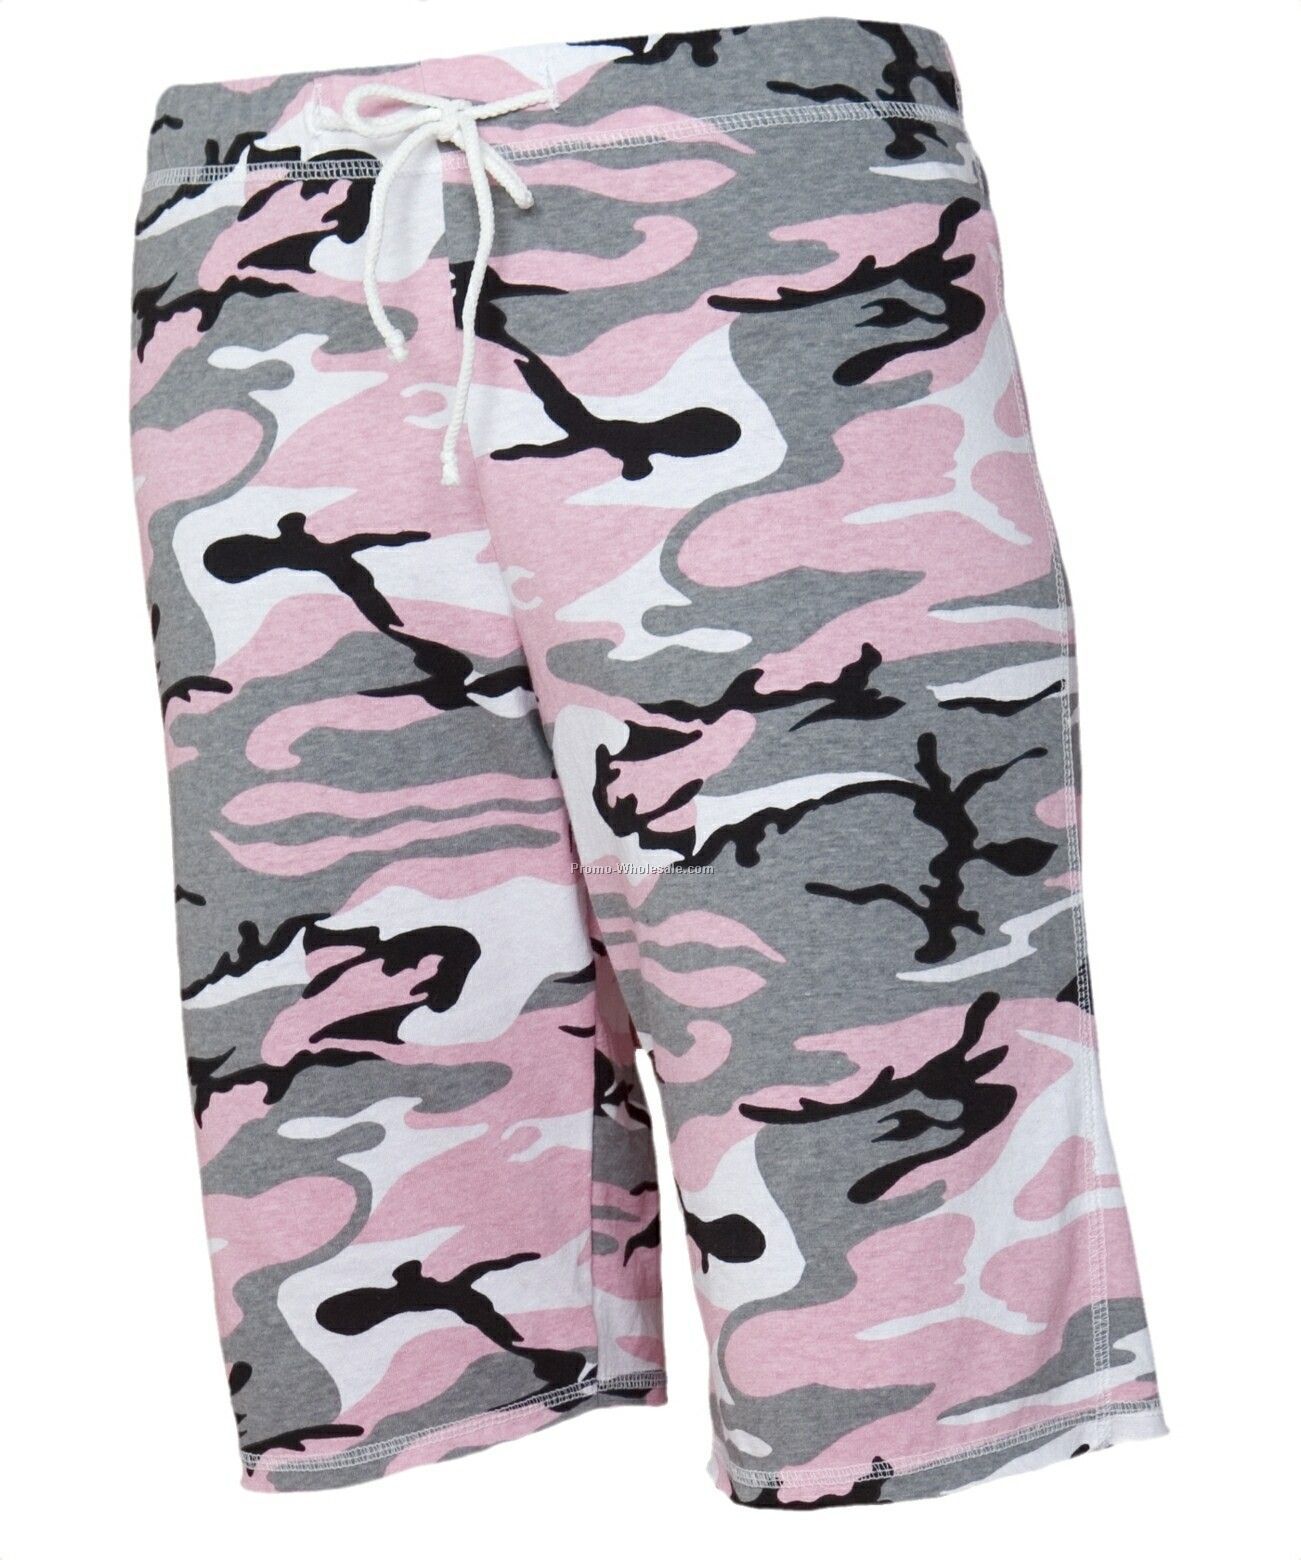 Adults' Pink Camo Board Shorts (Xs-xl)